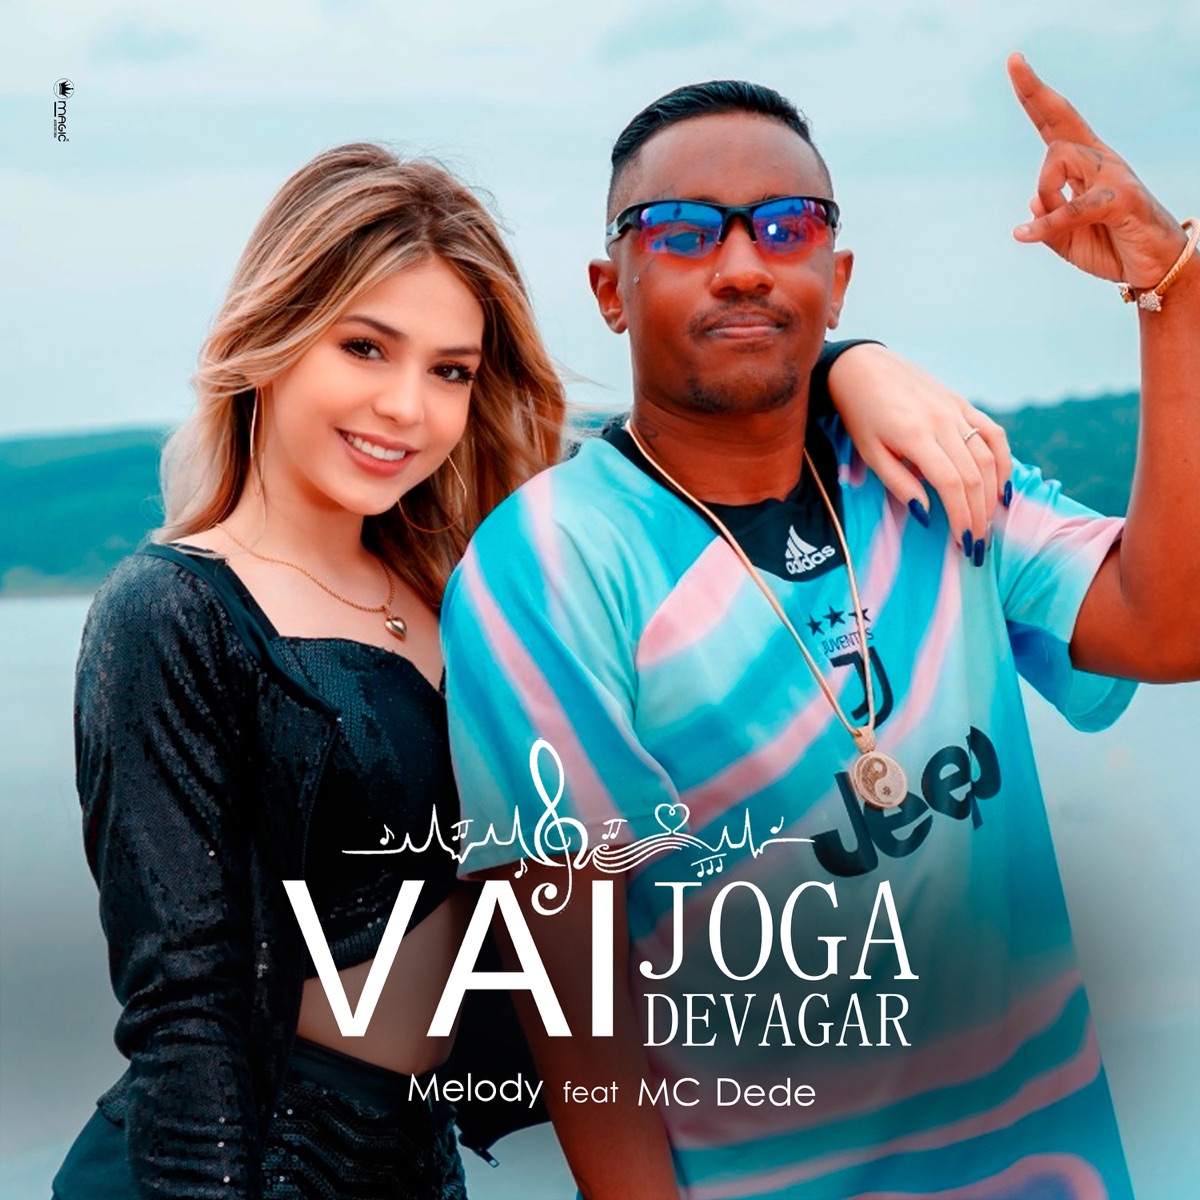 Vai Joga Devagar (feat. Mc Dede) - Single - Album by Melody - Apple Music